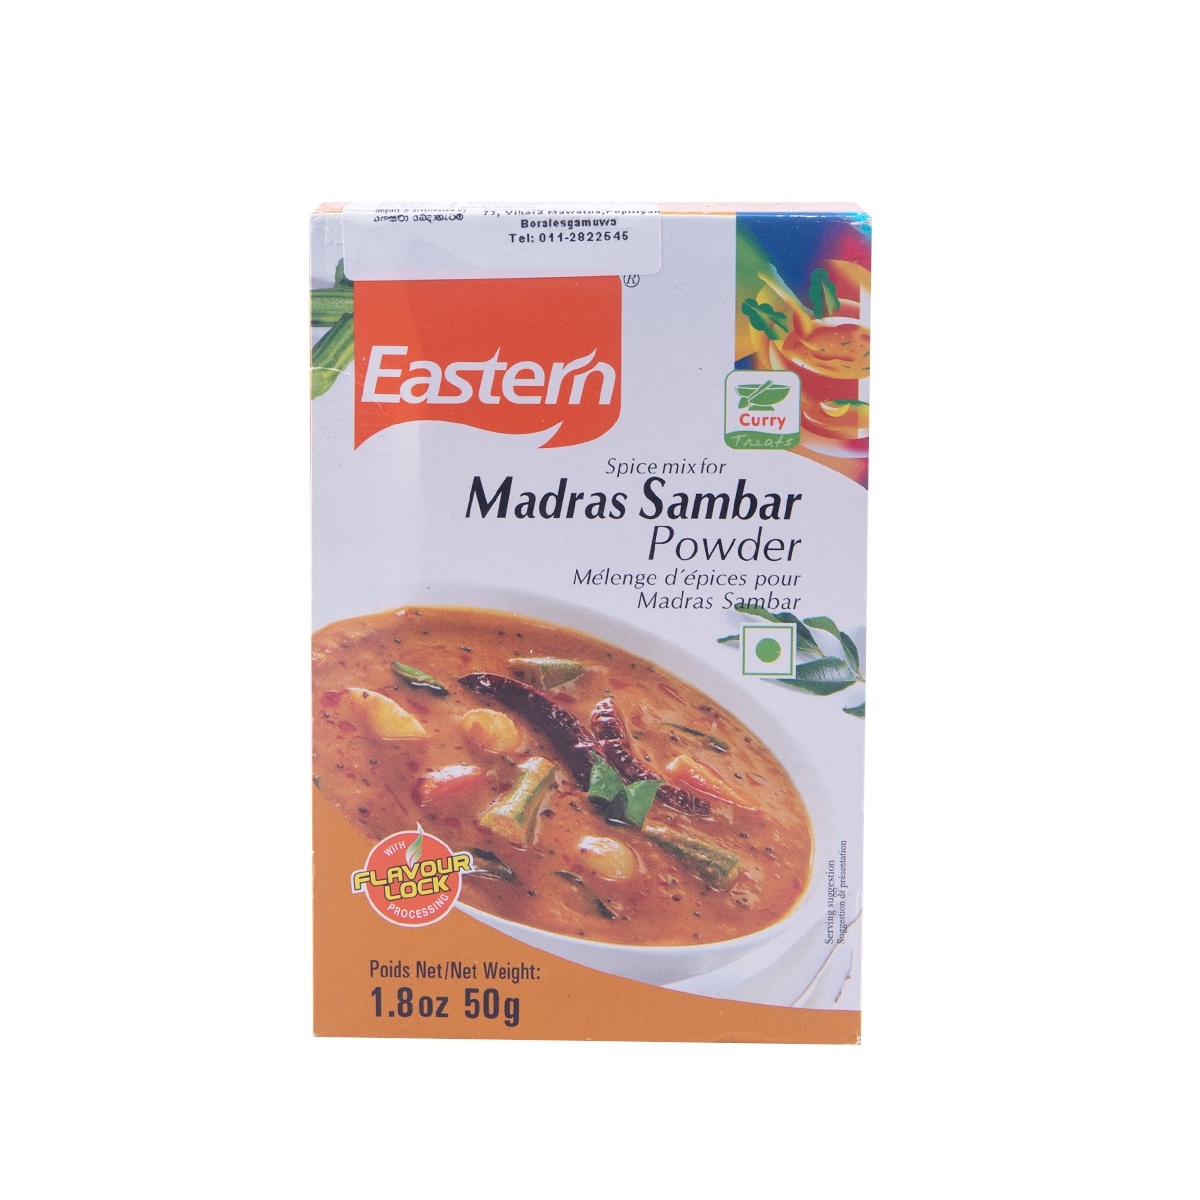 Eastern Madras Sambar Powder 50g - EASTERN - Seasoning - in Sri Lanka